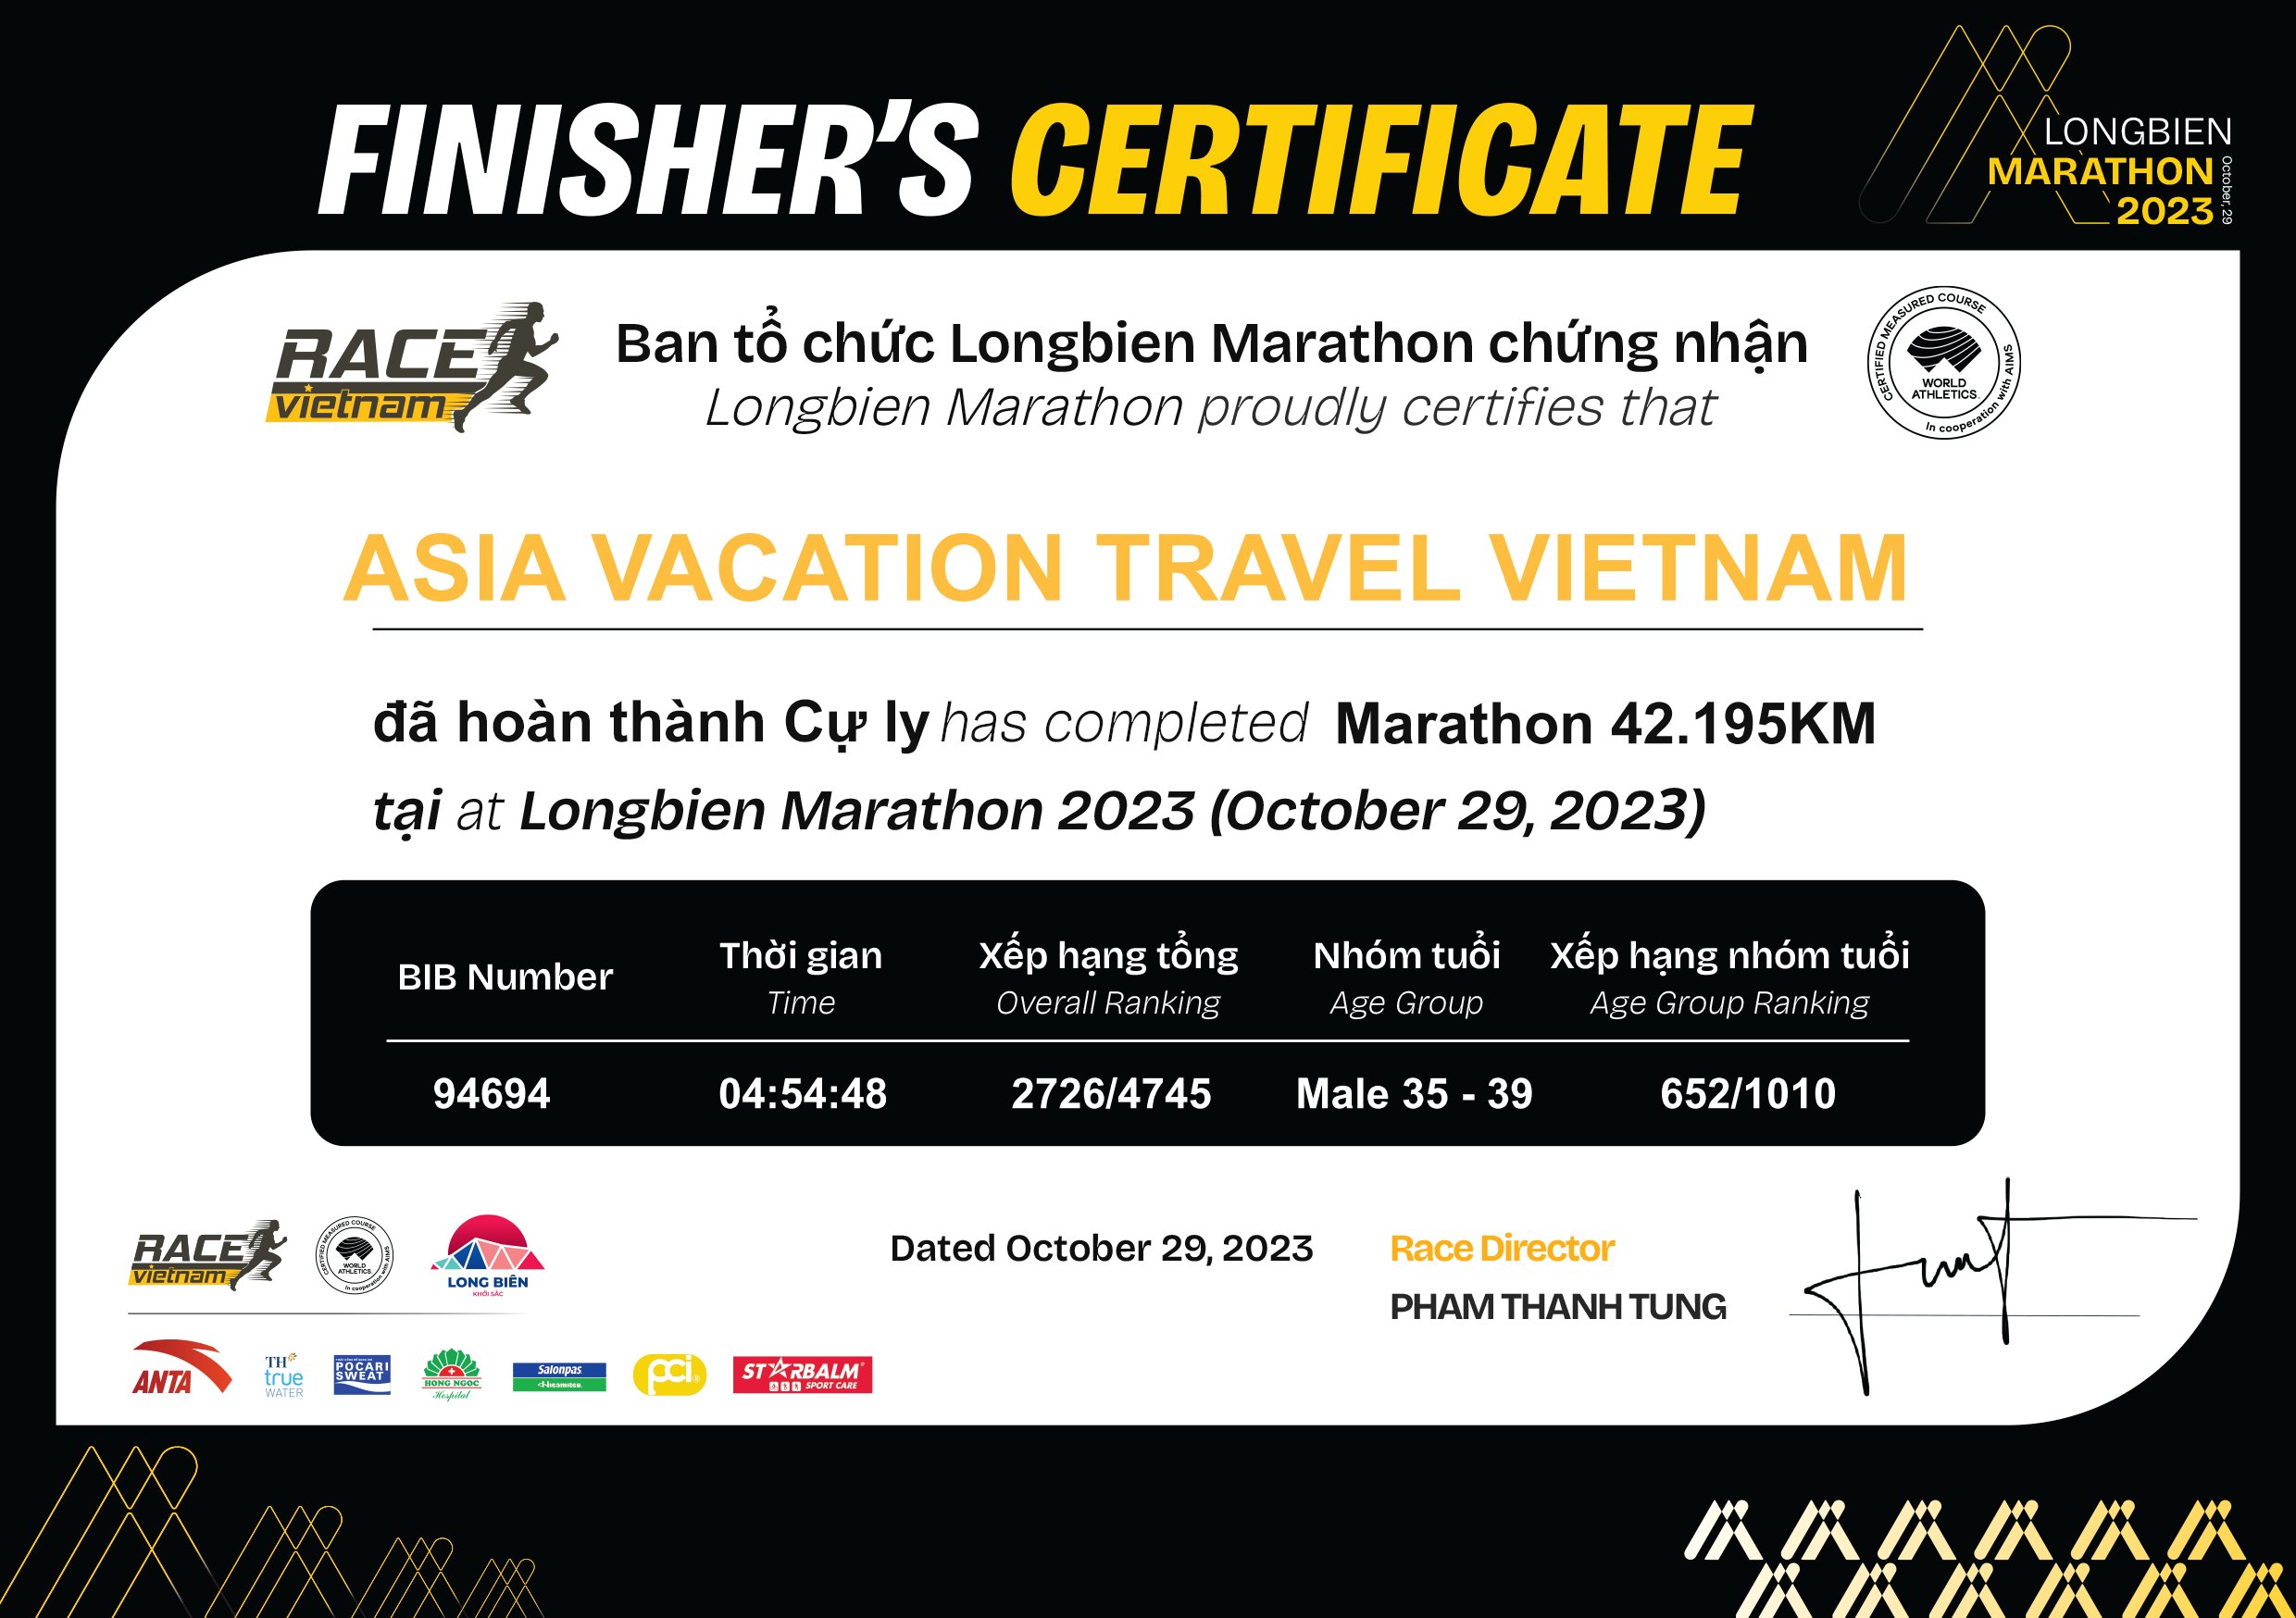 94694 - Asia Vacation Travel Vietnam